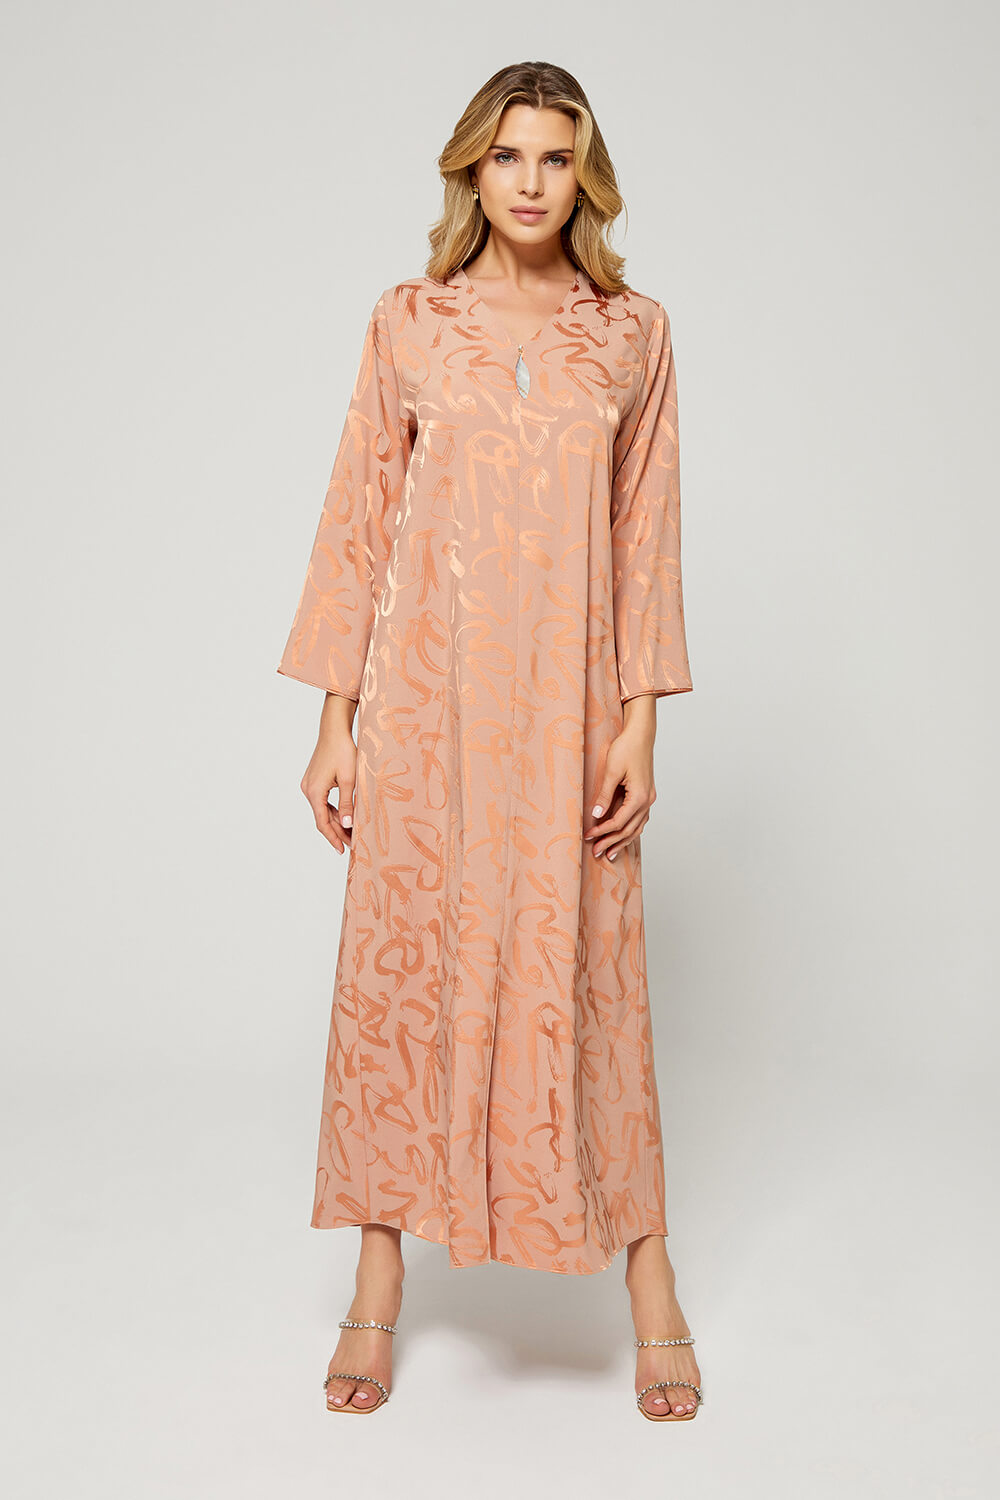 Sahara - Luxury Patterned and Zippered Rayon Full Length Dress - Dark Nude